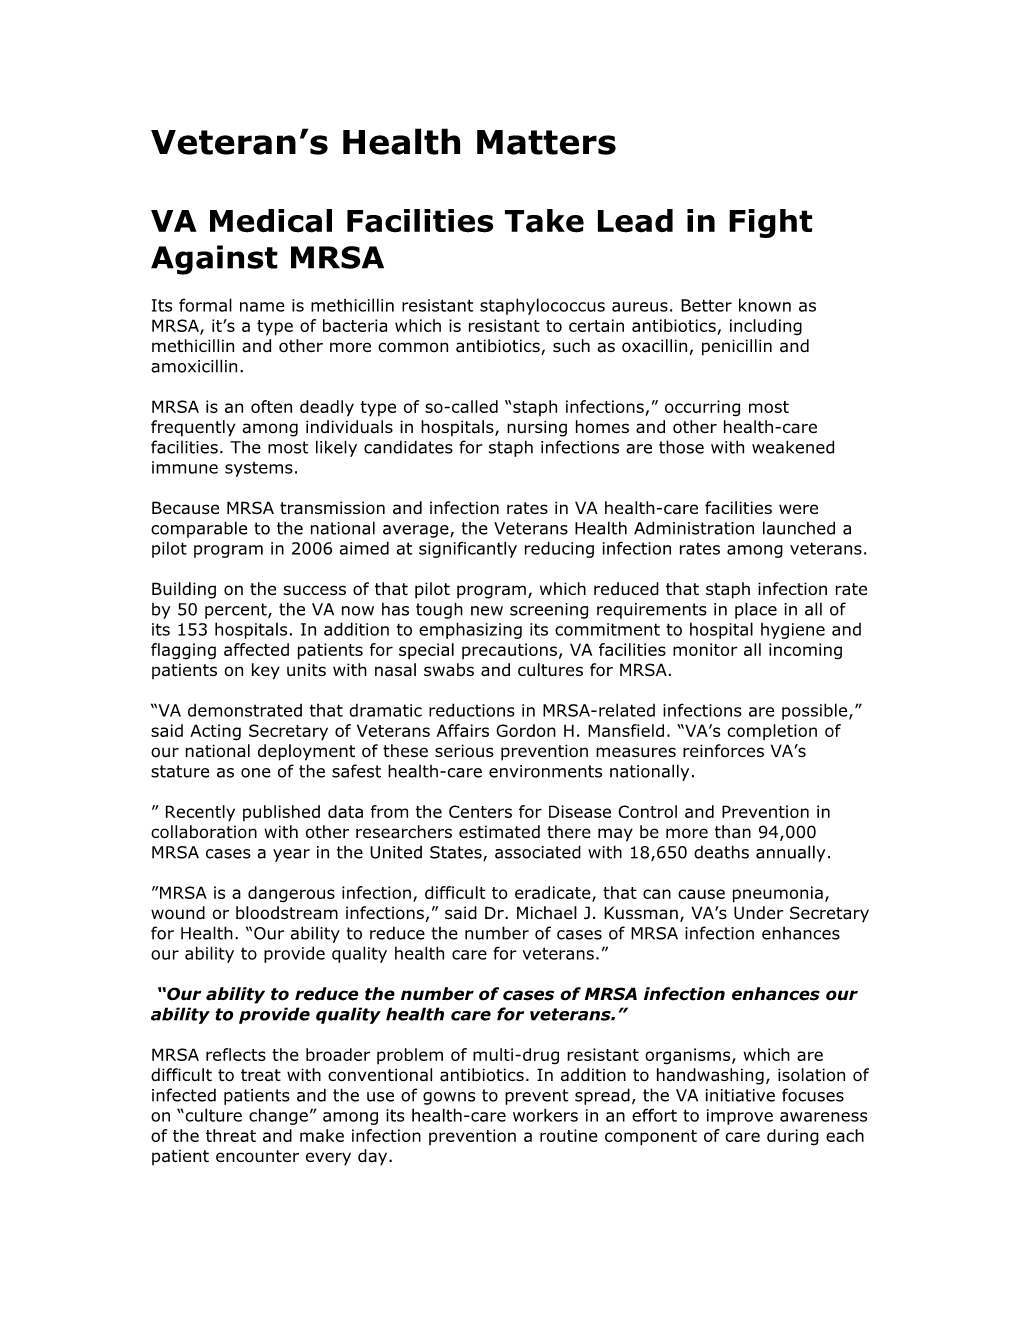 VA Medical Facilities Take Lead in Fight Against MRSA